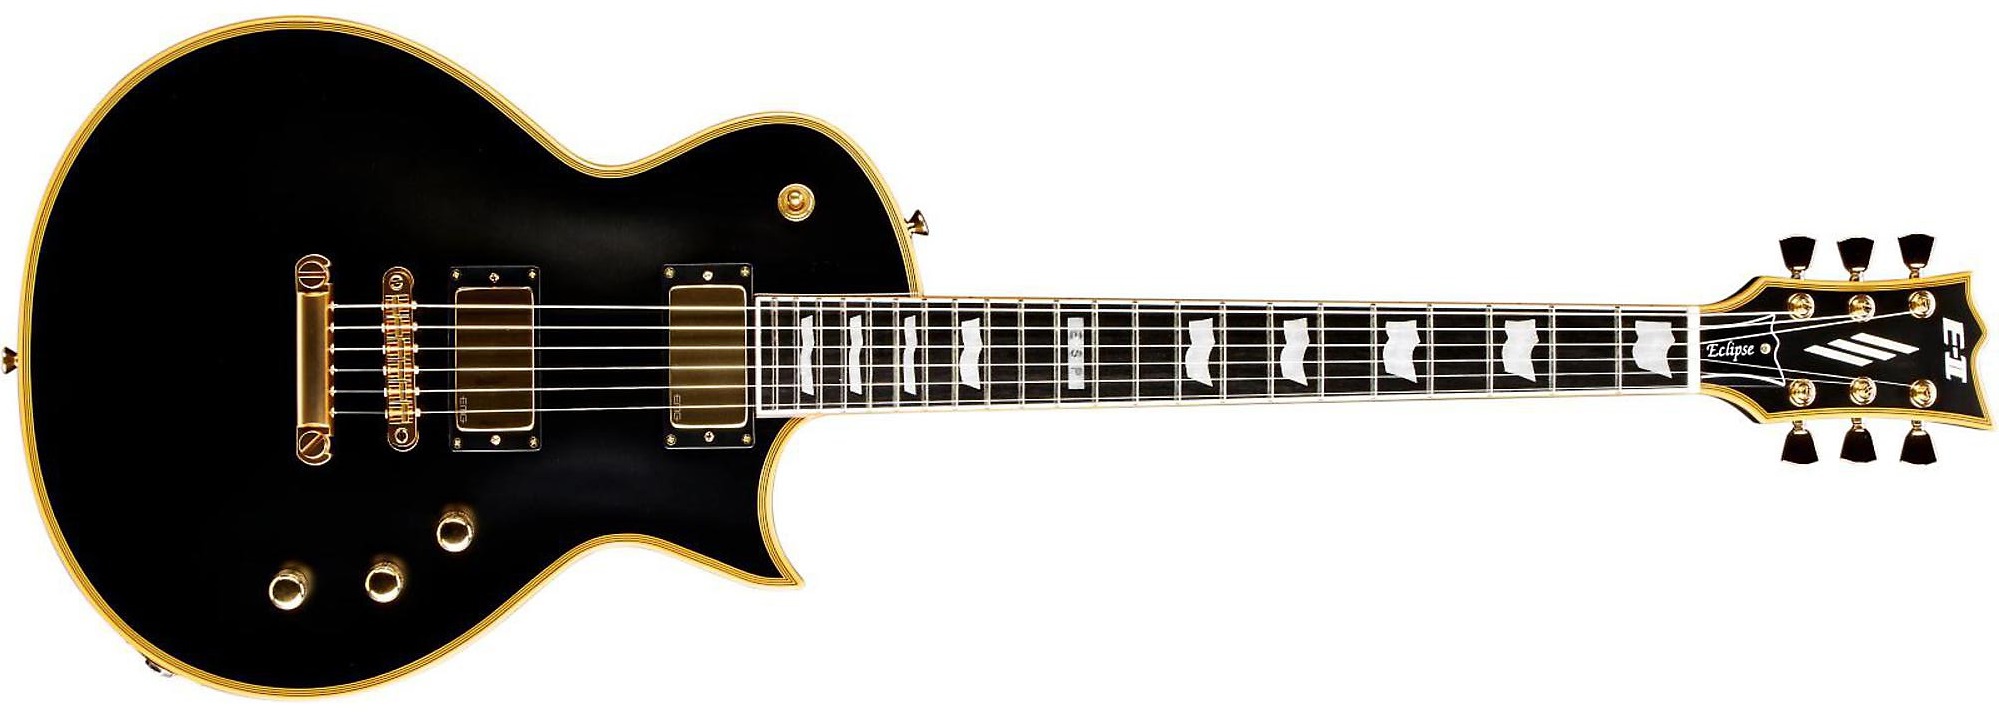 ESP E-II Eclipse Electric Guitar on a white background